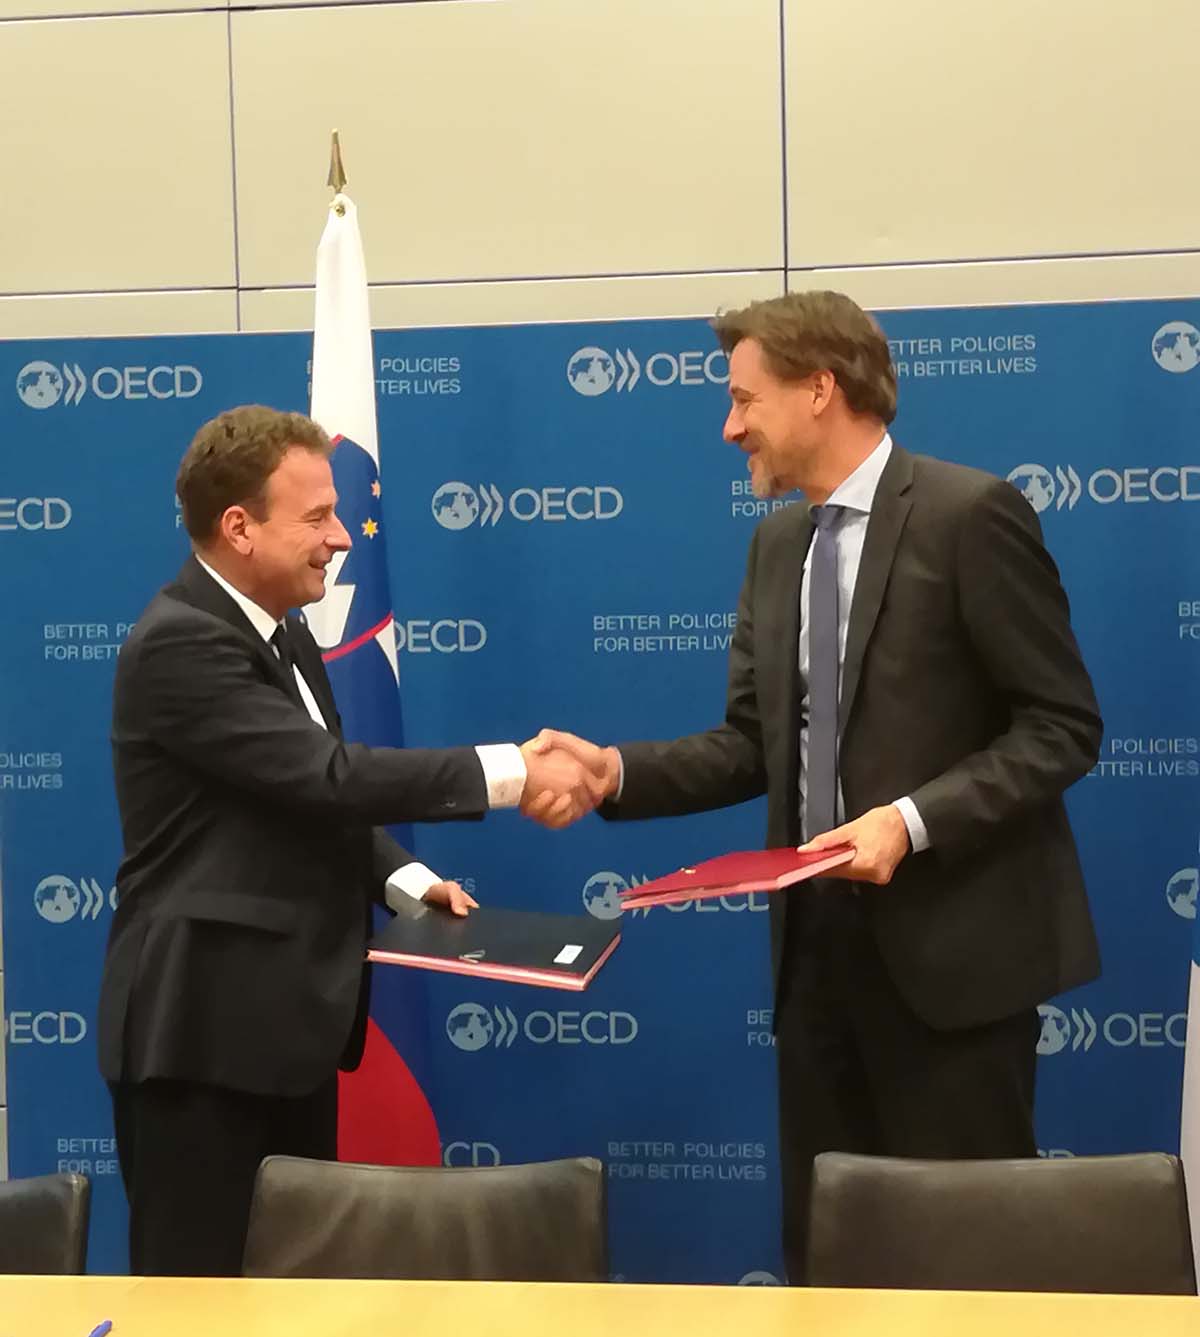 OECD Partnerships & implementation : handshake